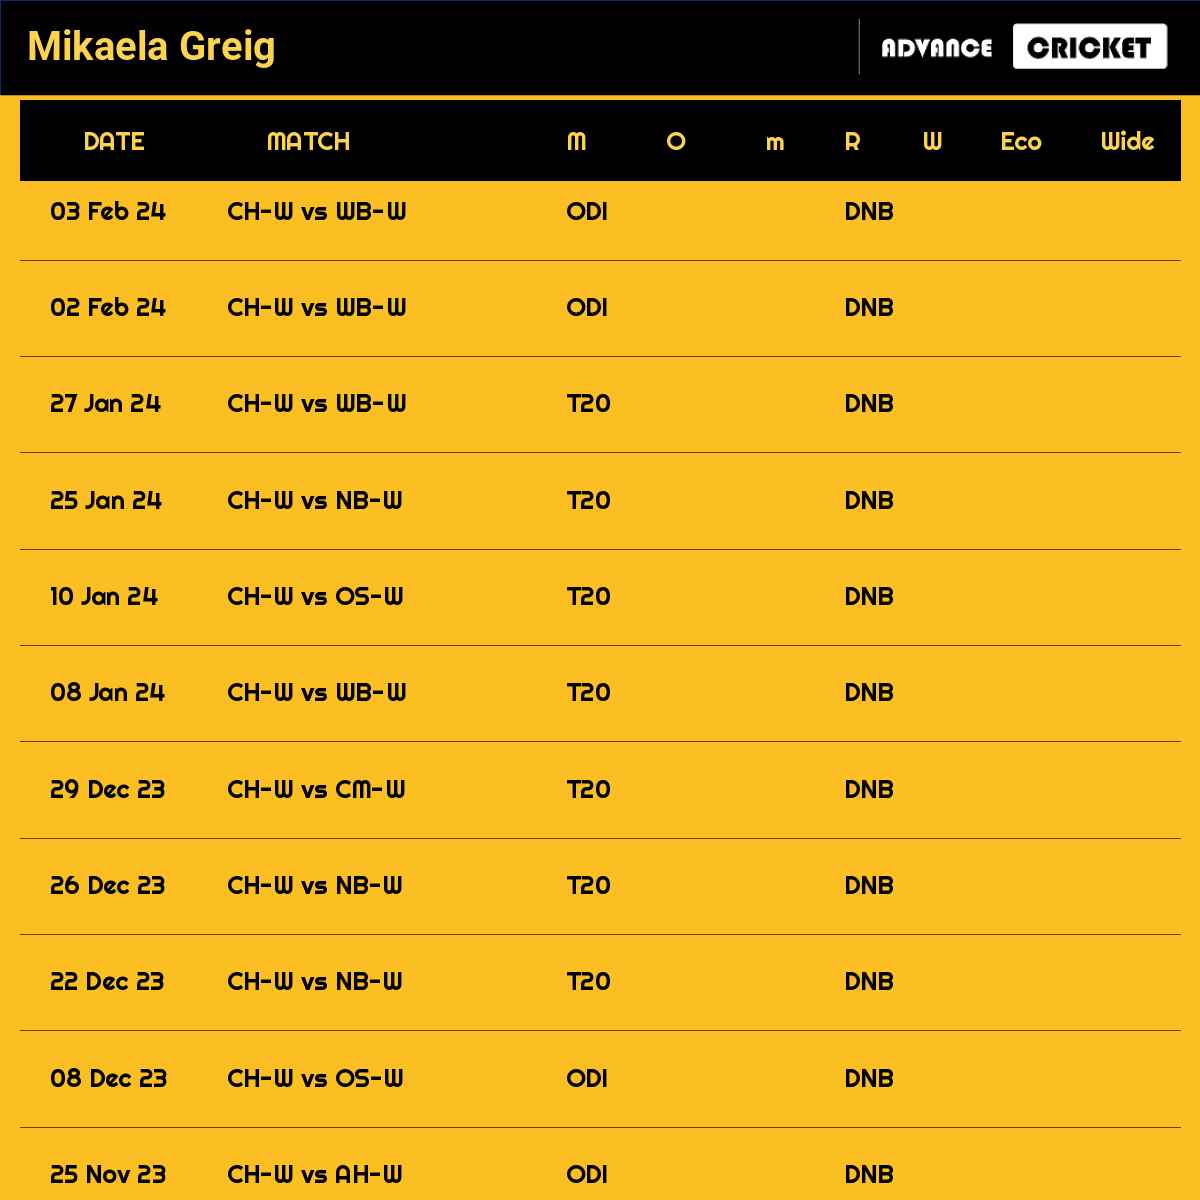 Mikaela Greig recent matches